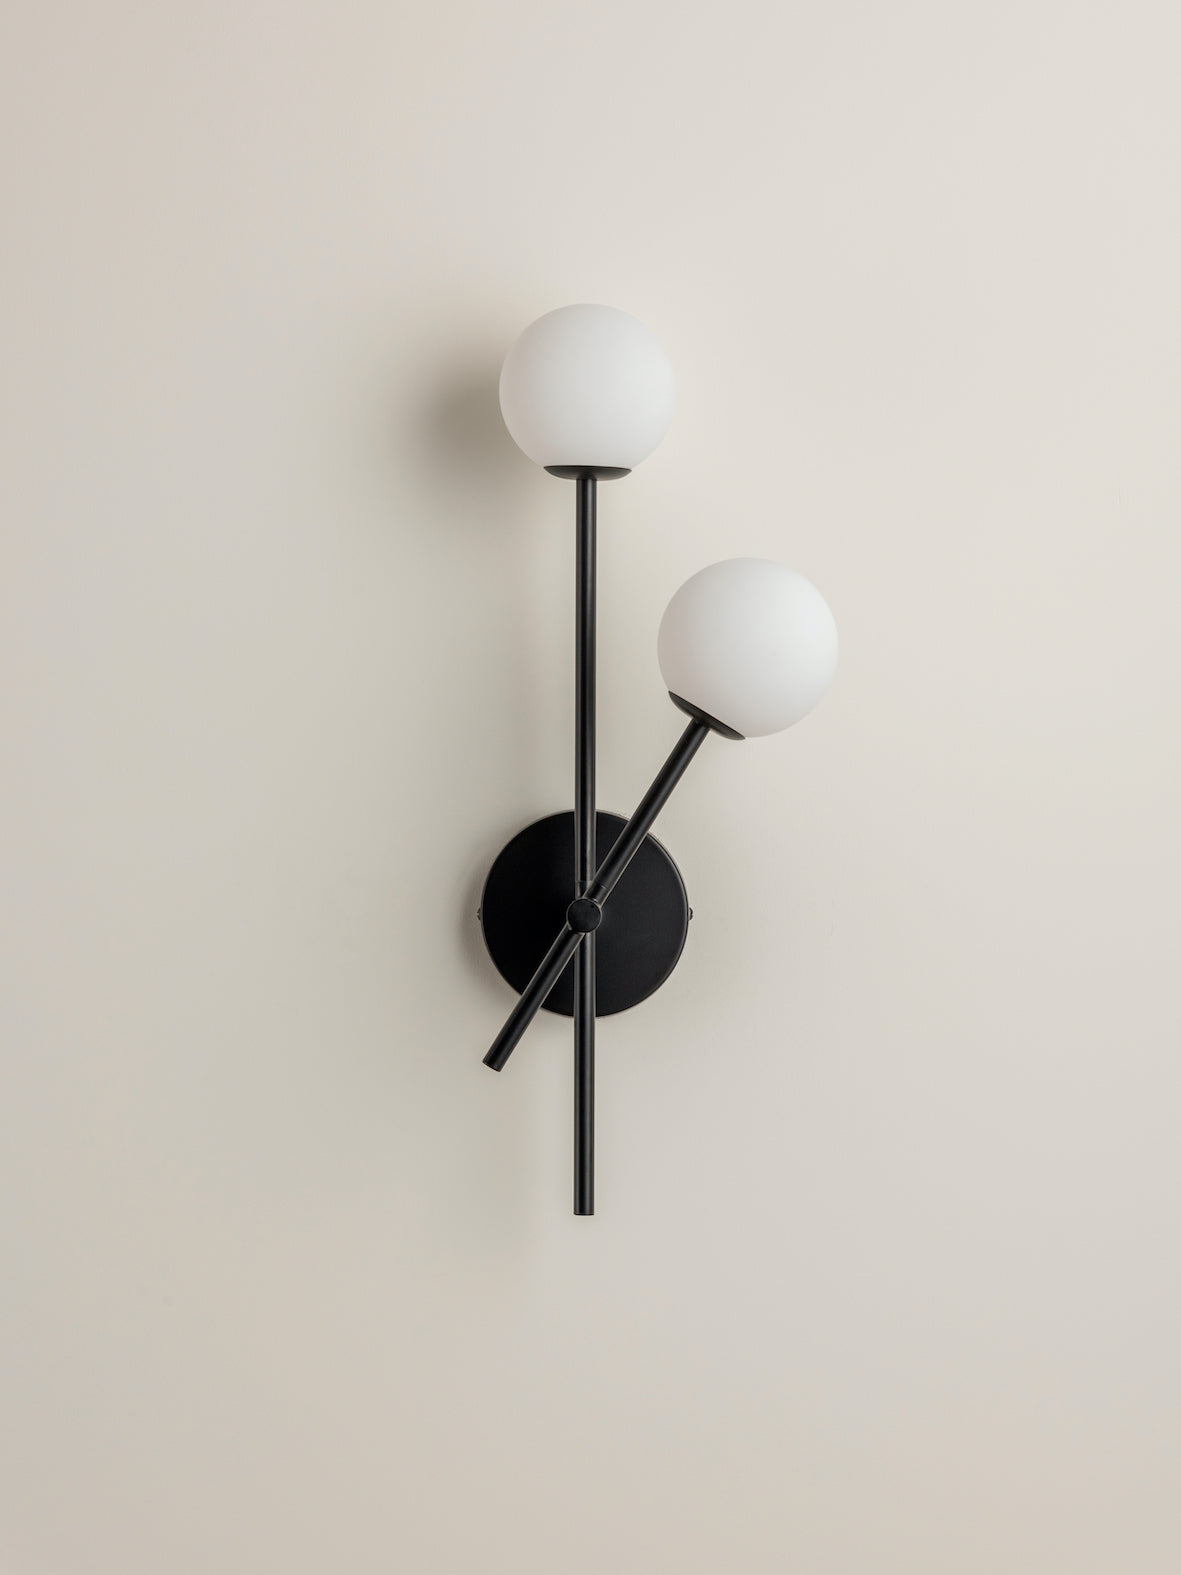 Chelso - 2 light matt black and opal wall light | Wall Light | Lights & Lamps | UK | Modern Affordable Designer Lighting